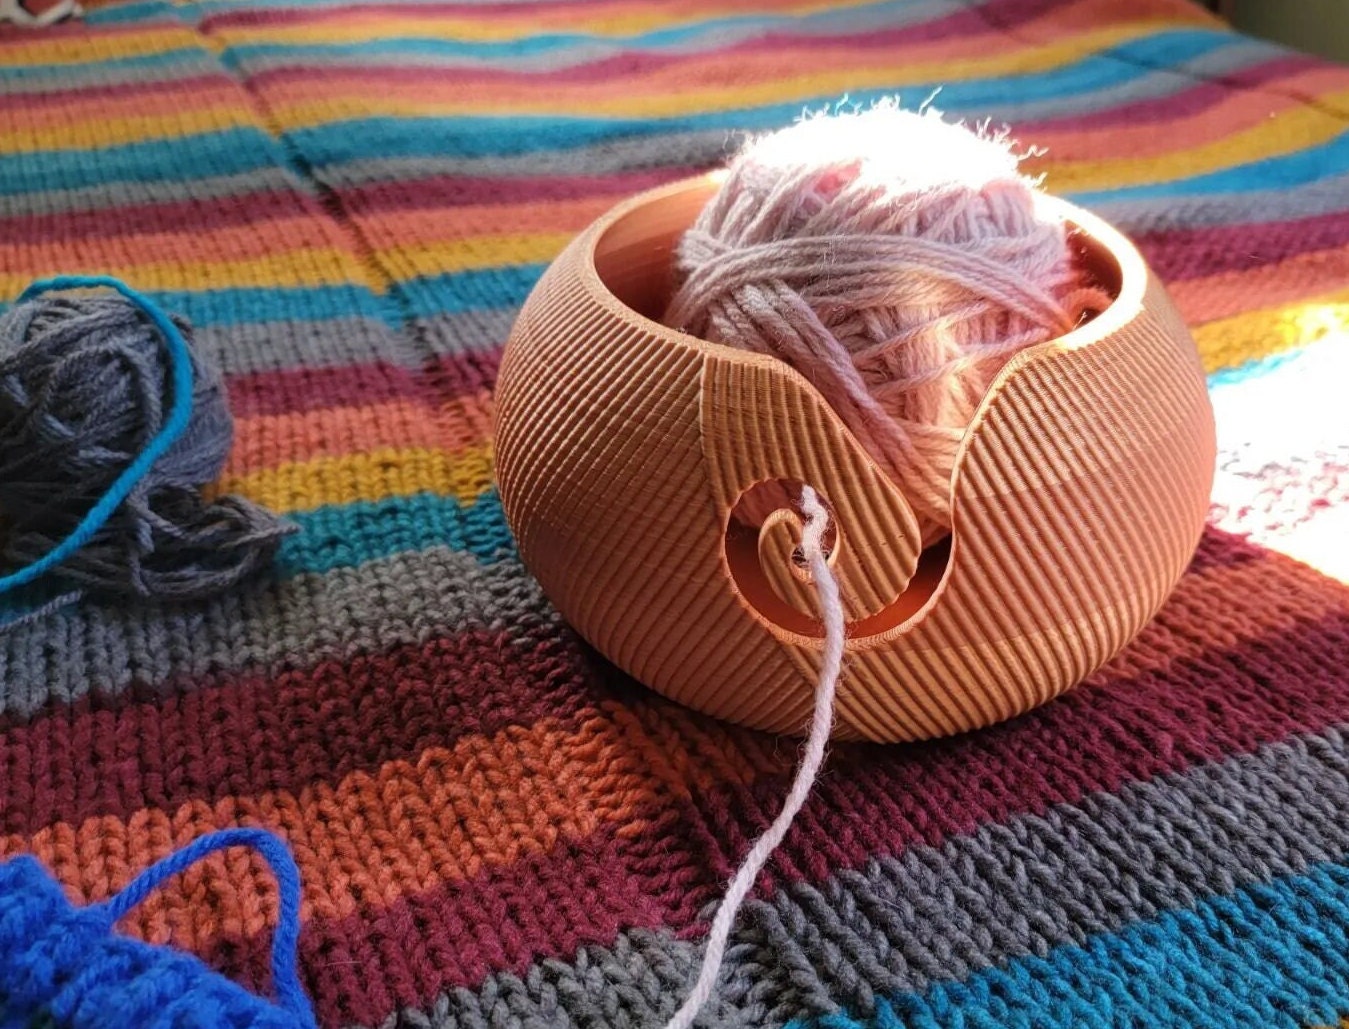 Sensational Sheep - Yarn Bobbins for Knit or Crochet Colorwork